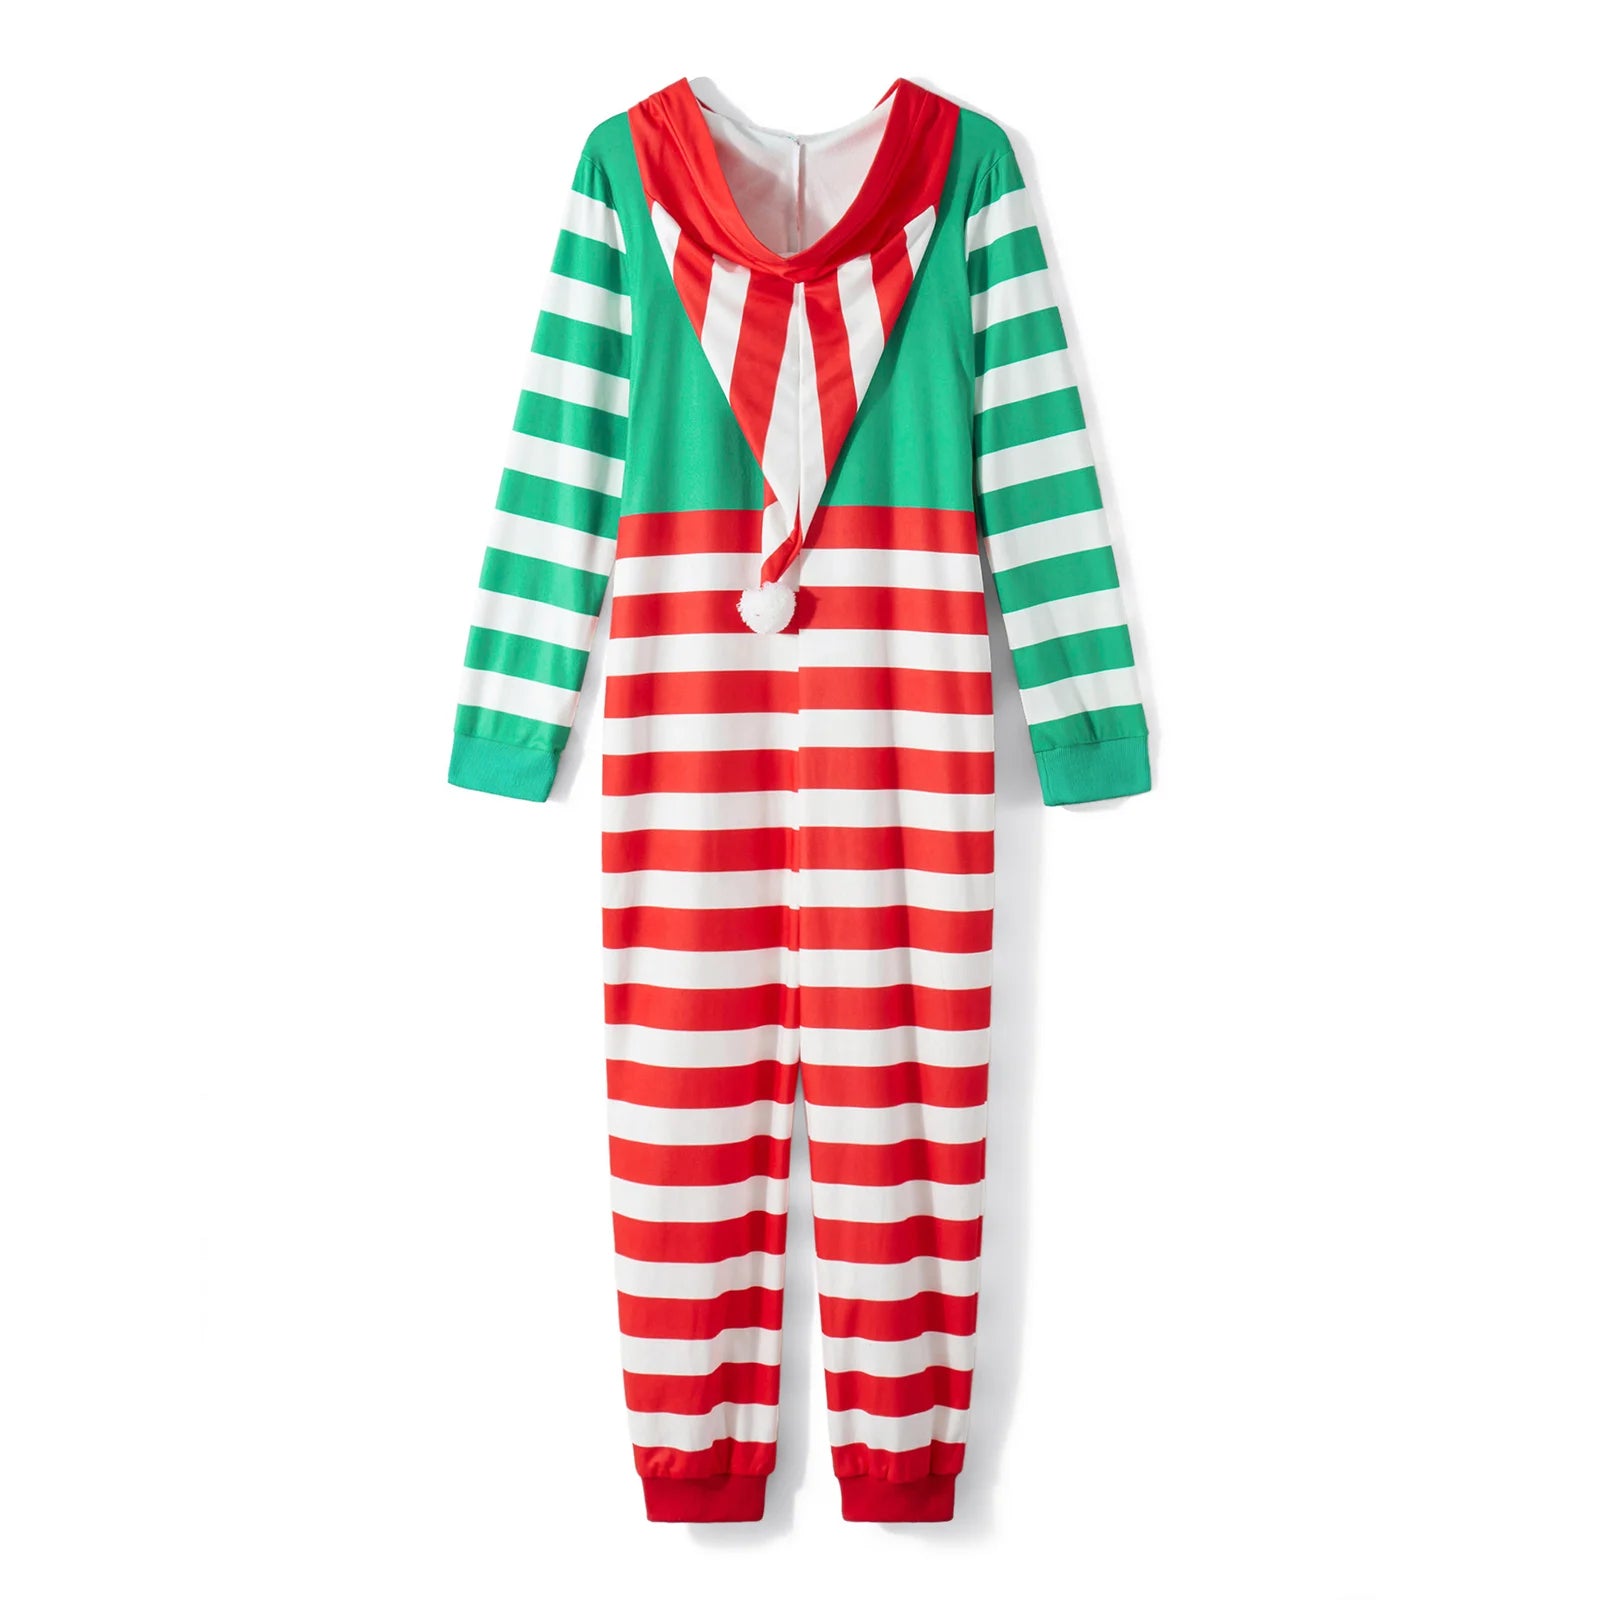 Combhasaki Women's Christmas Casual Pajamas Oneseies Romper Long Sleeve Zip Up Hooded Jumpsuit Sleepwear Holiday Costume - FabFemina